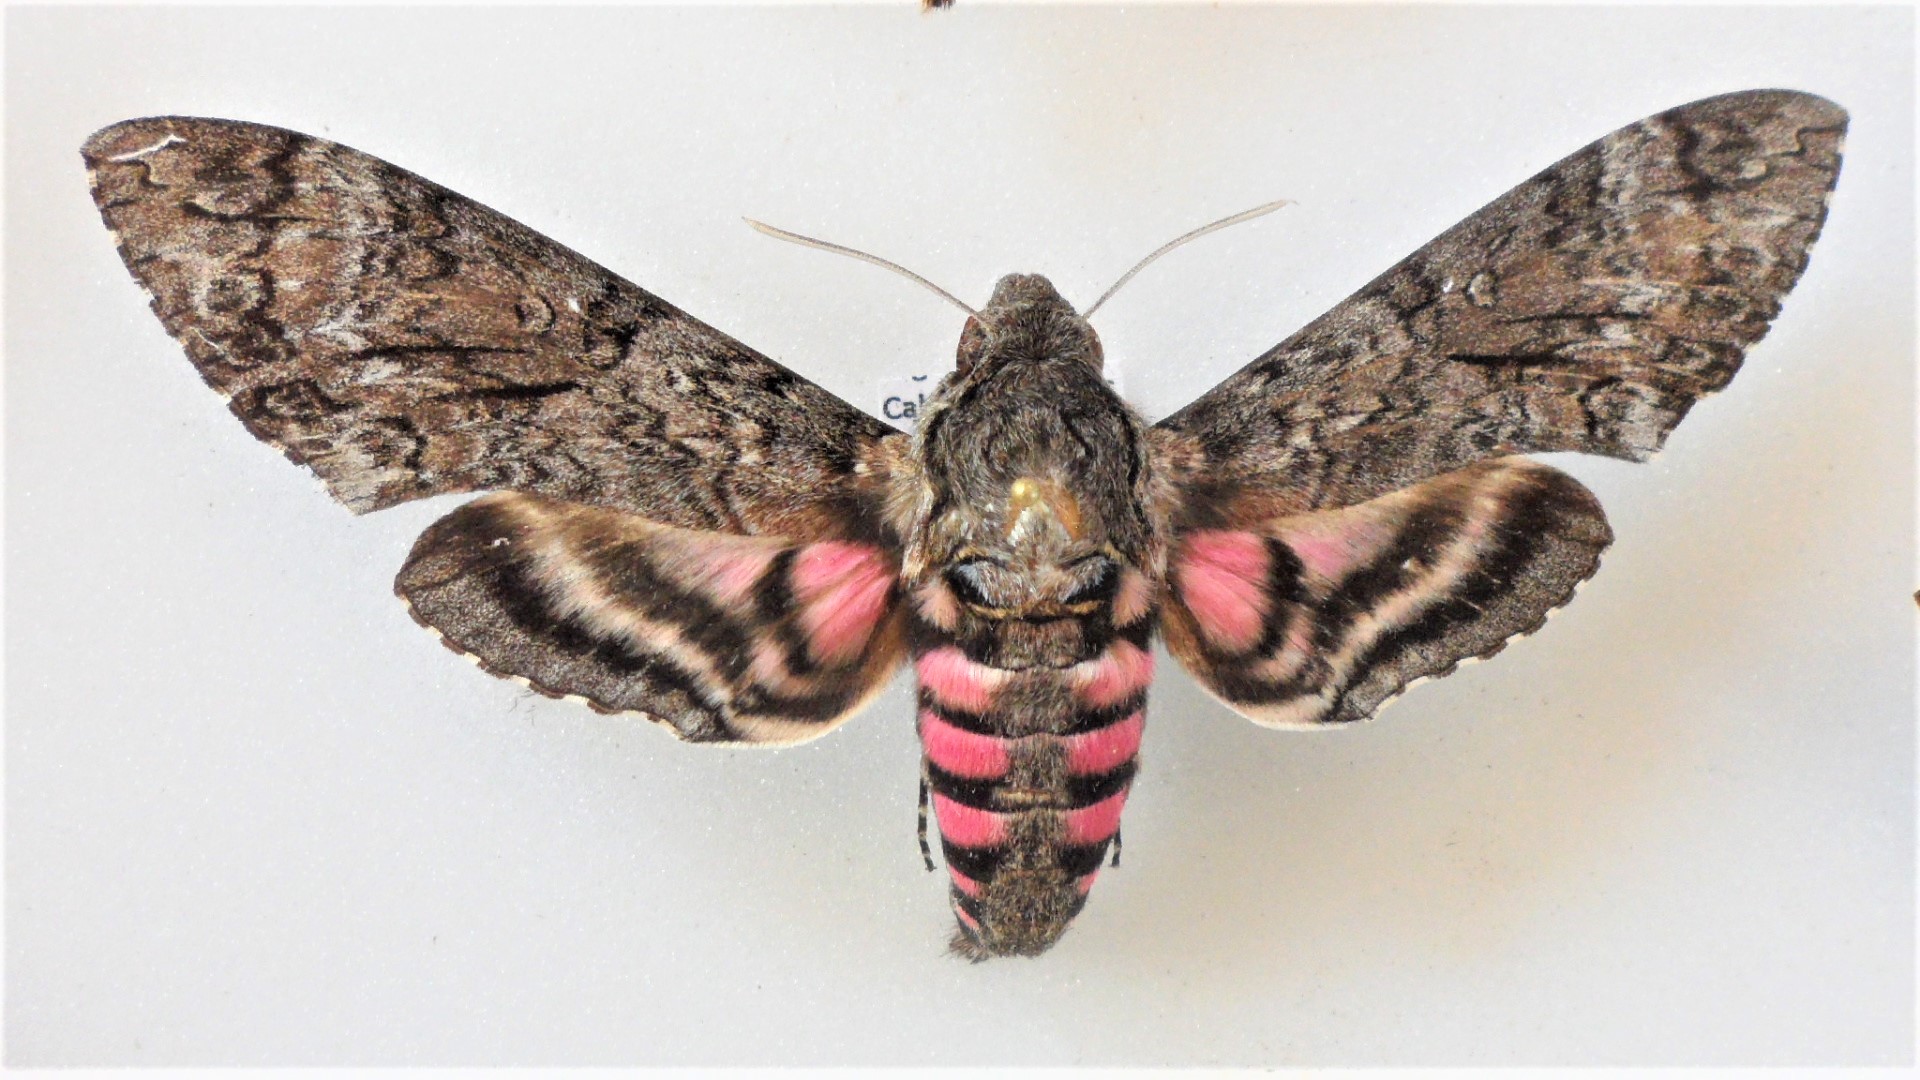 https://auth1.dpr.ncparks.gov/moths/photos_records/2020/11/Agrius_cingulata1604862293_0.jpg